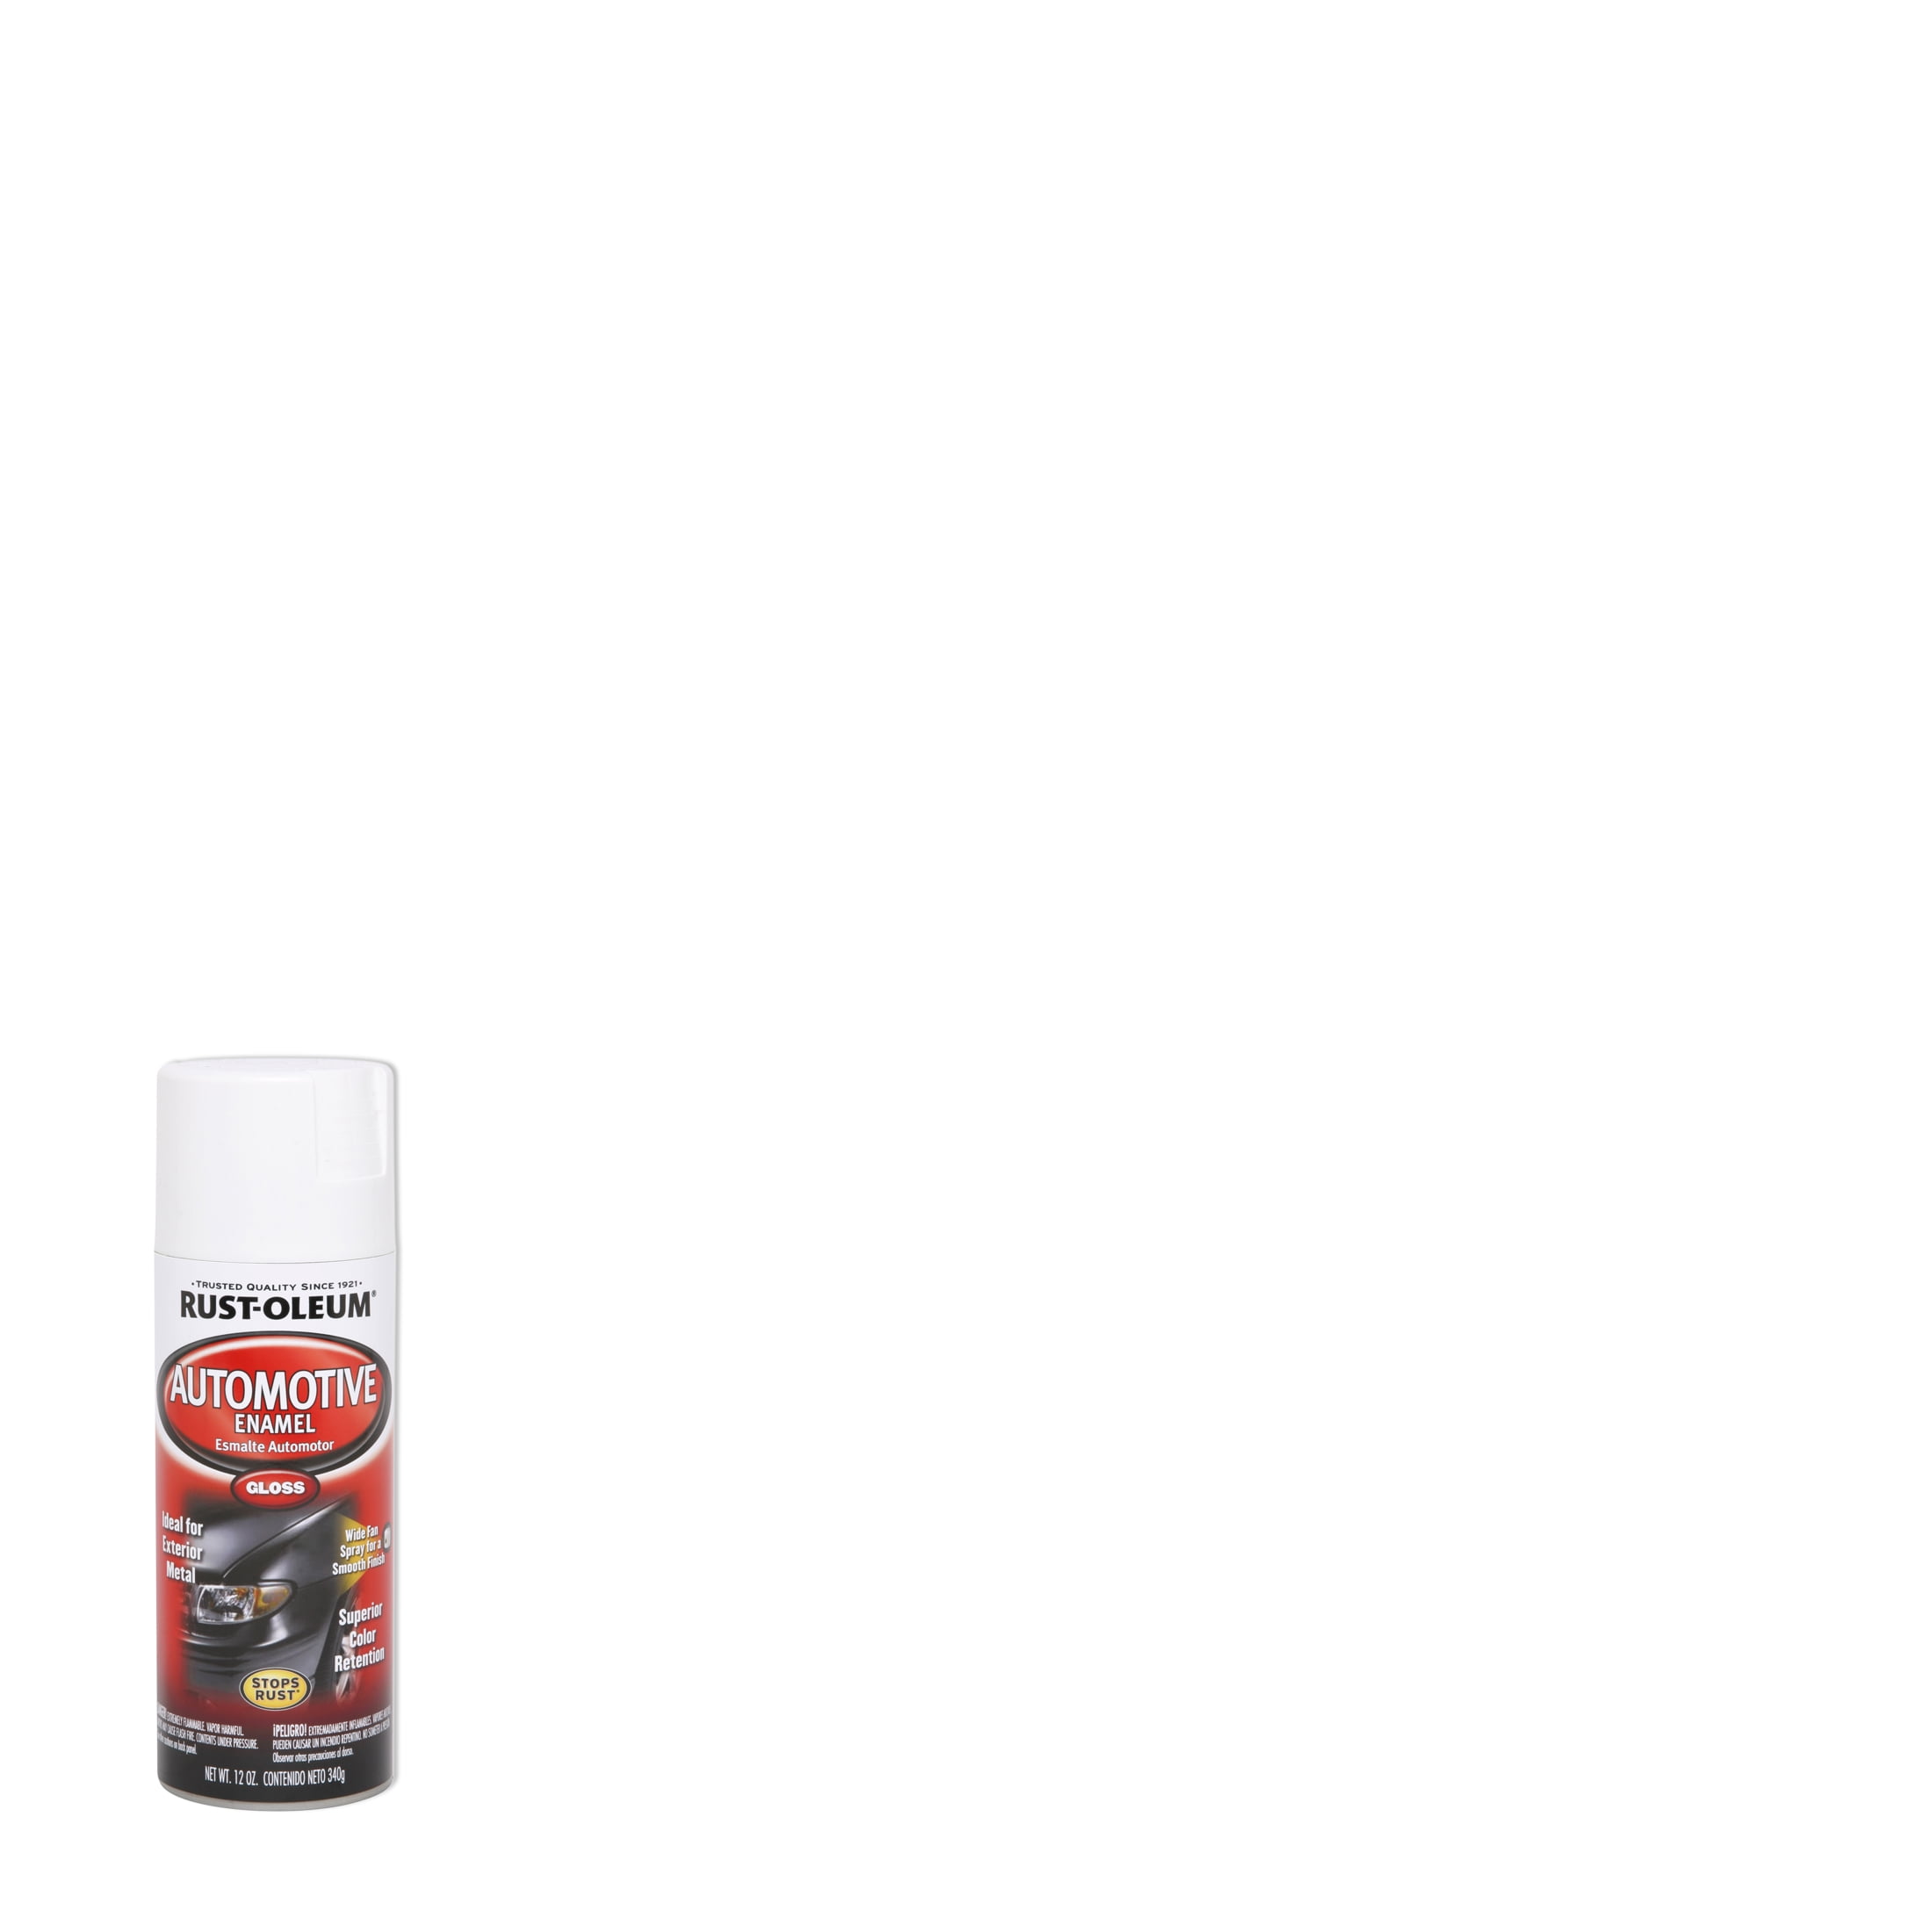 White, Rust-Oleum Automotive Gloss Acrylic Enamel 2X Spray Paint-271919, 12 oz